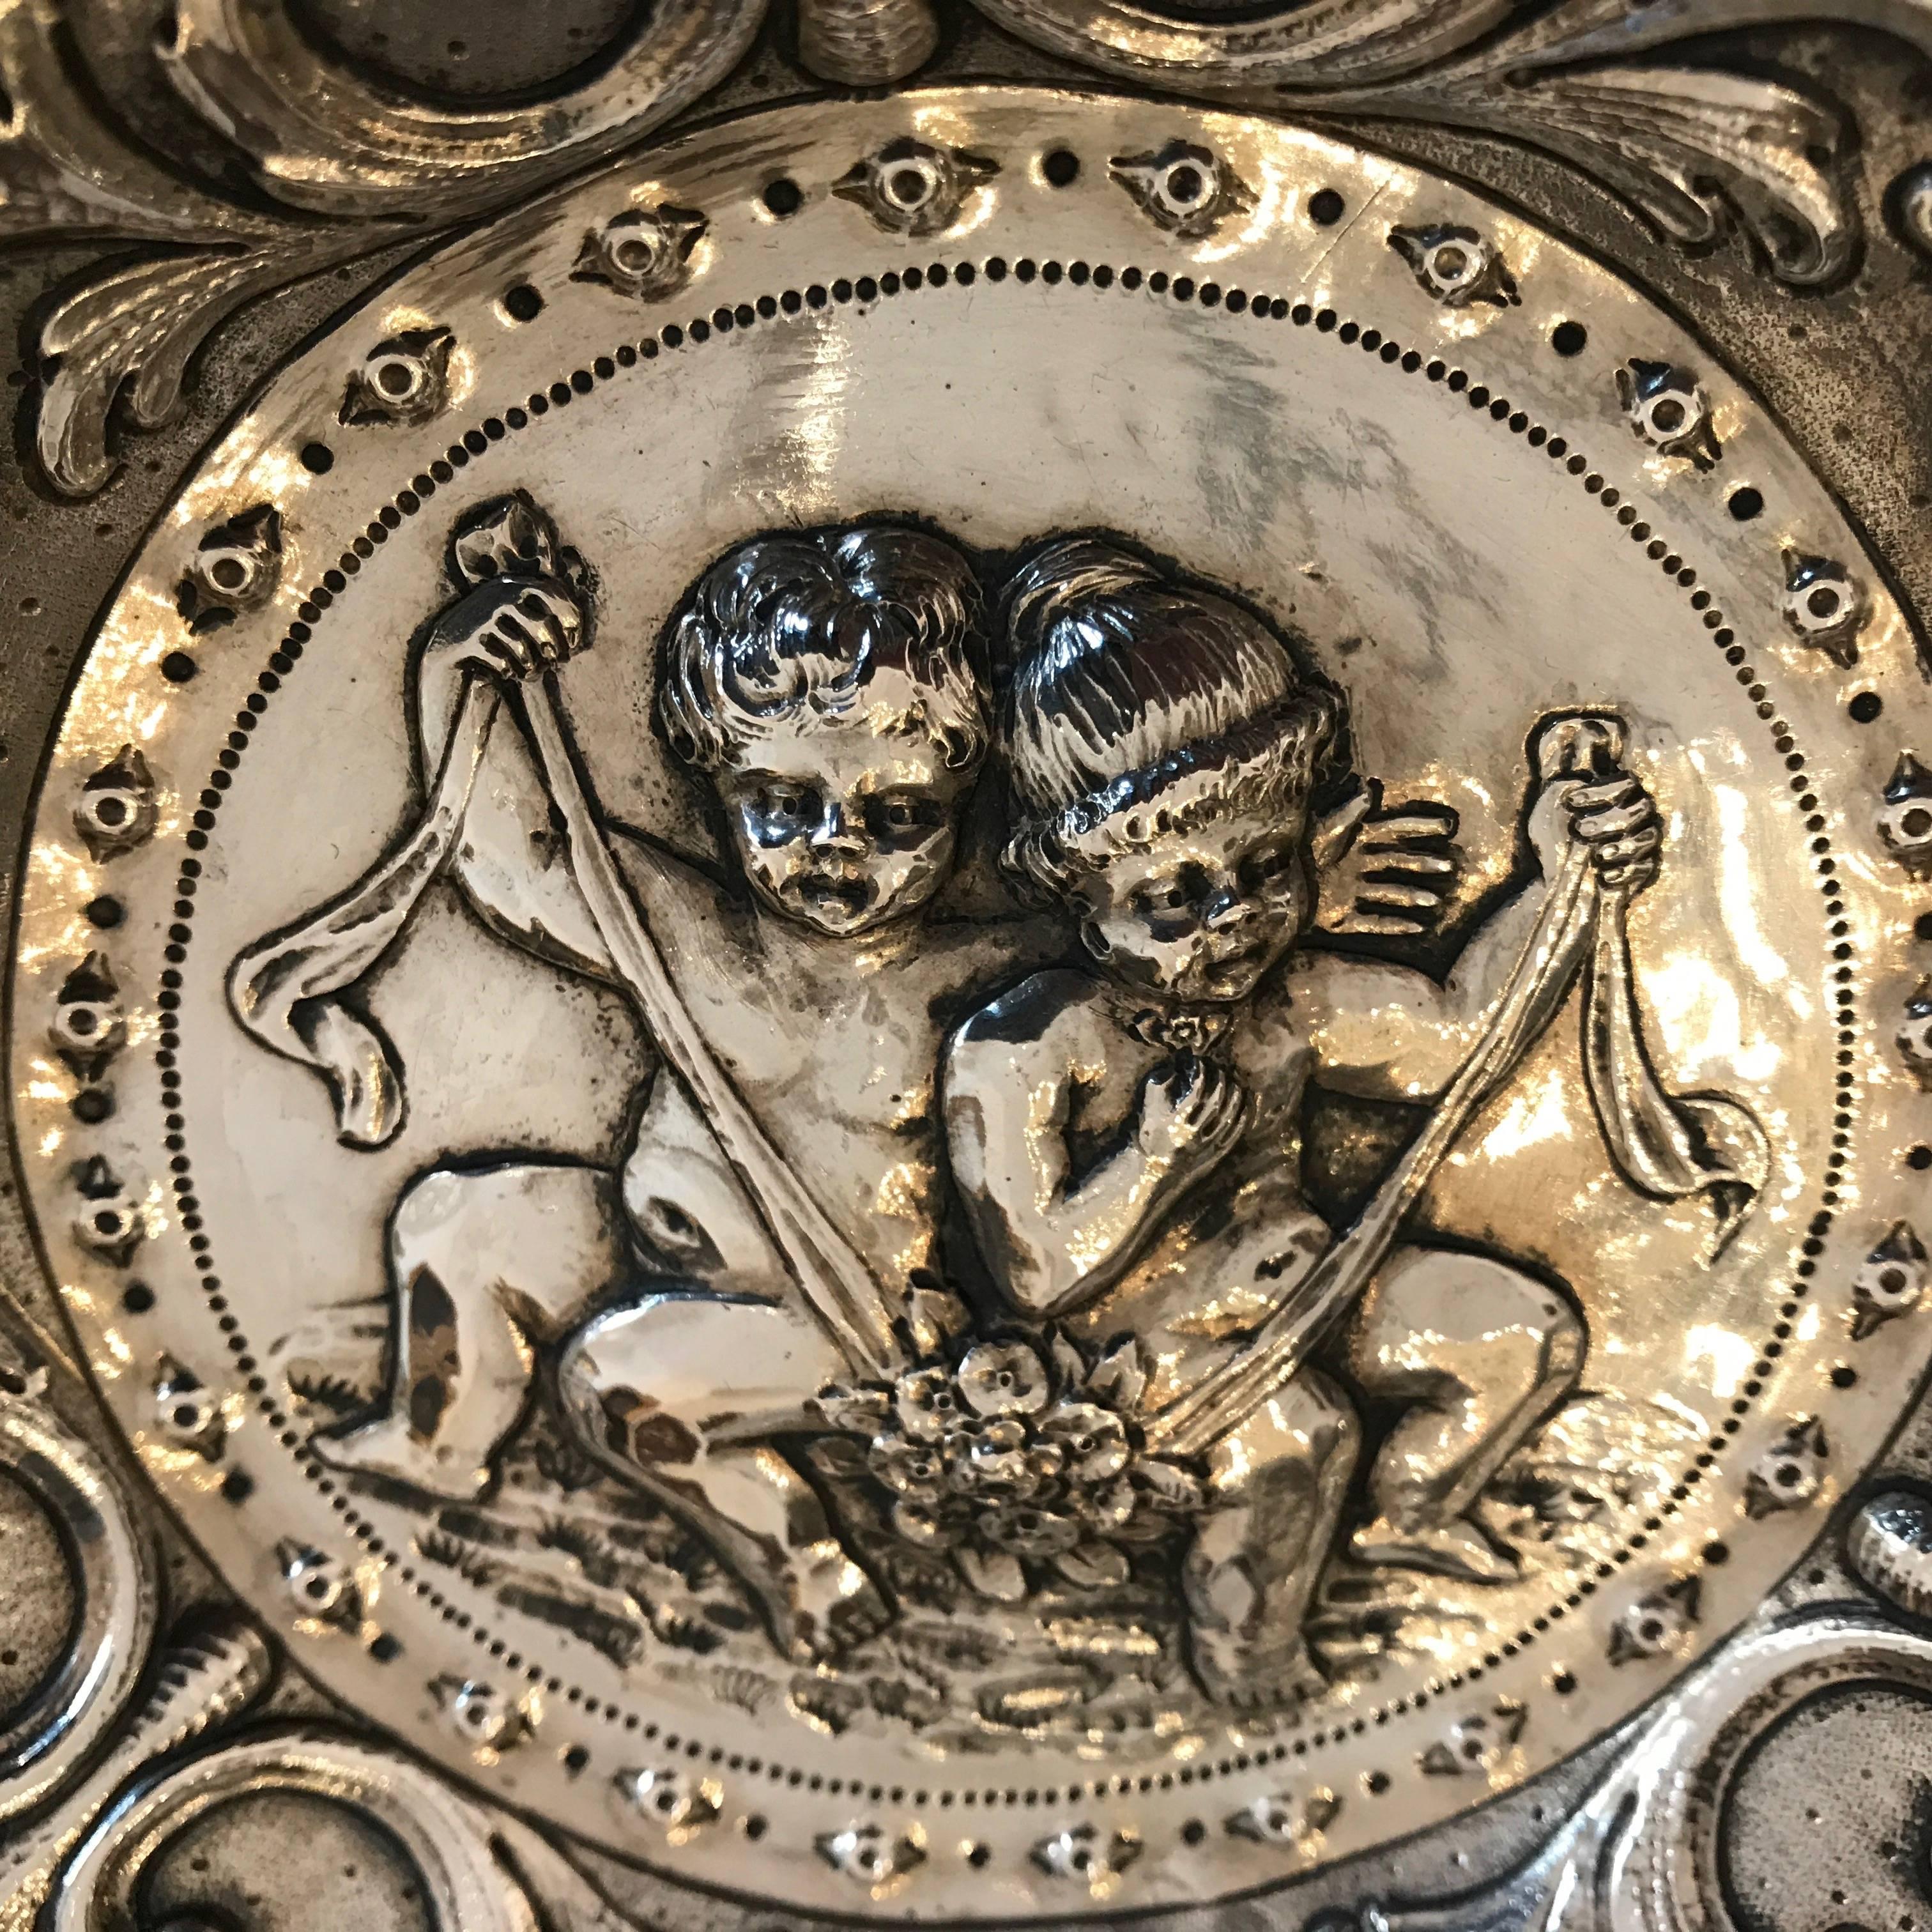 19th Century European Repoussé Silver Dish with Children Grotesque Mask FIgures 2